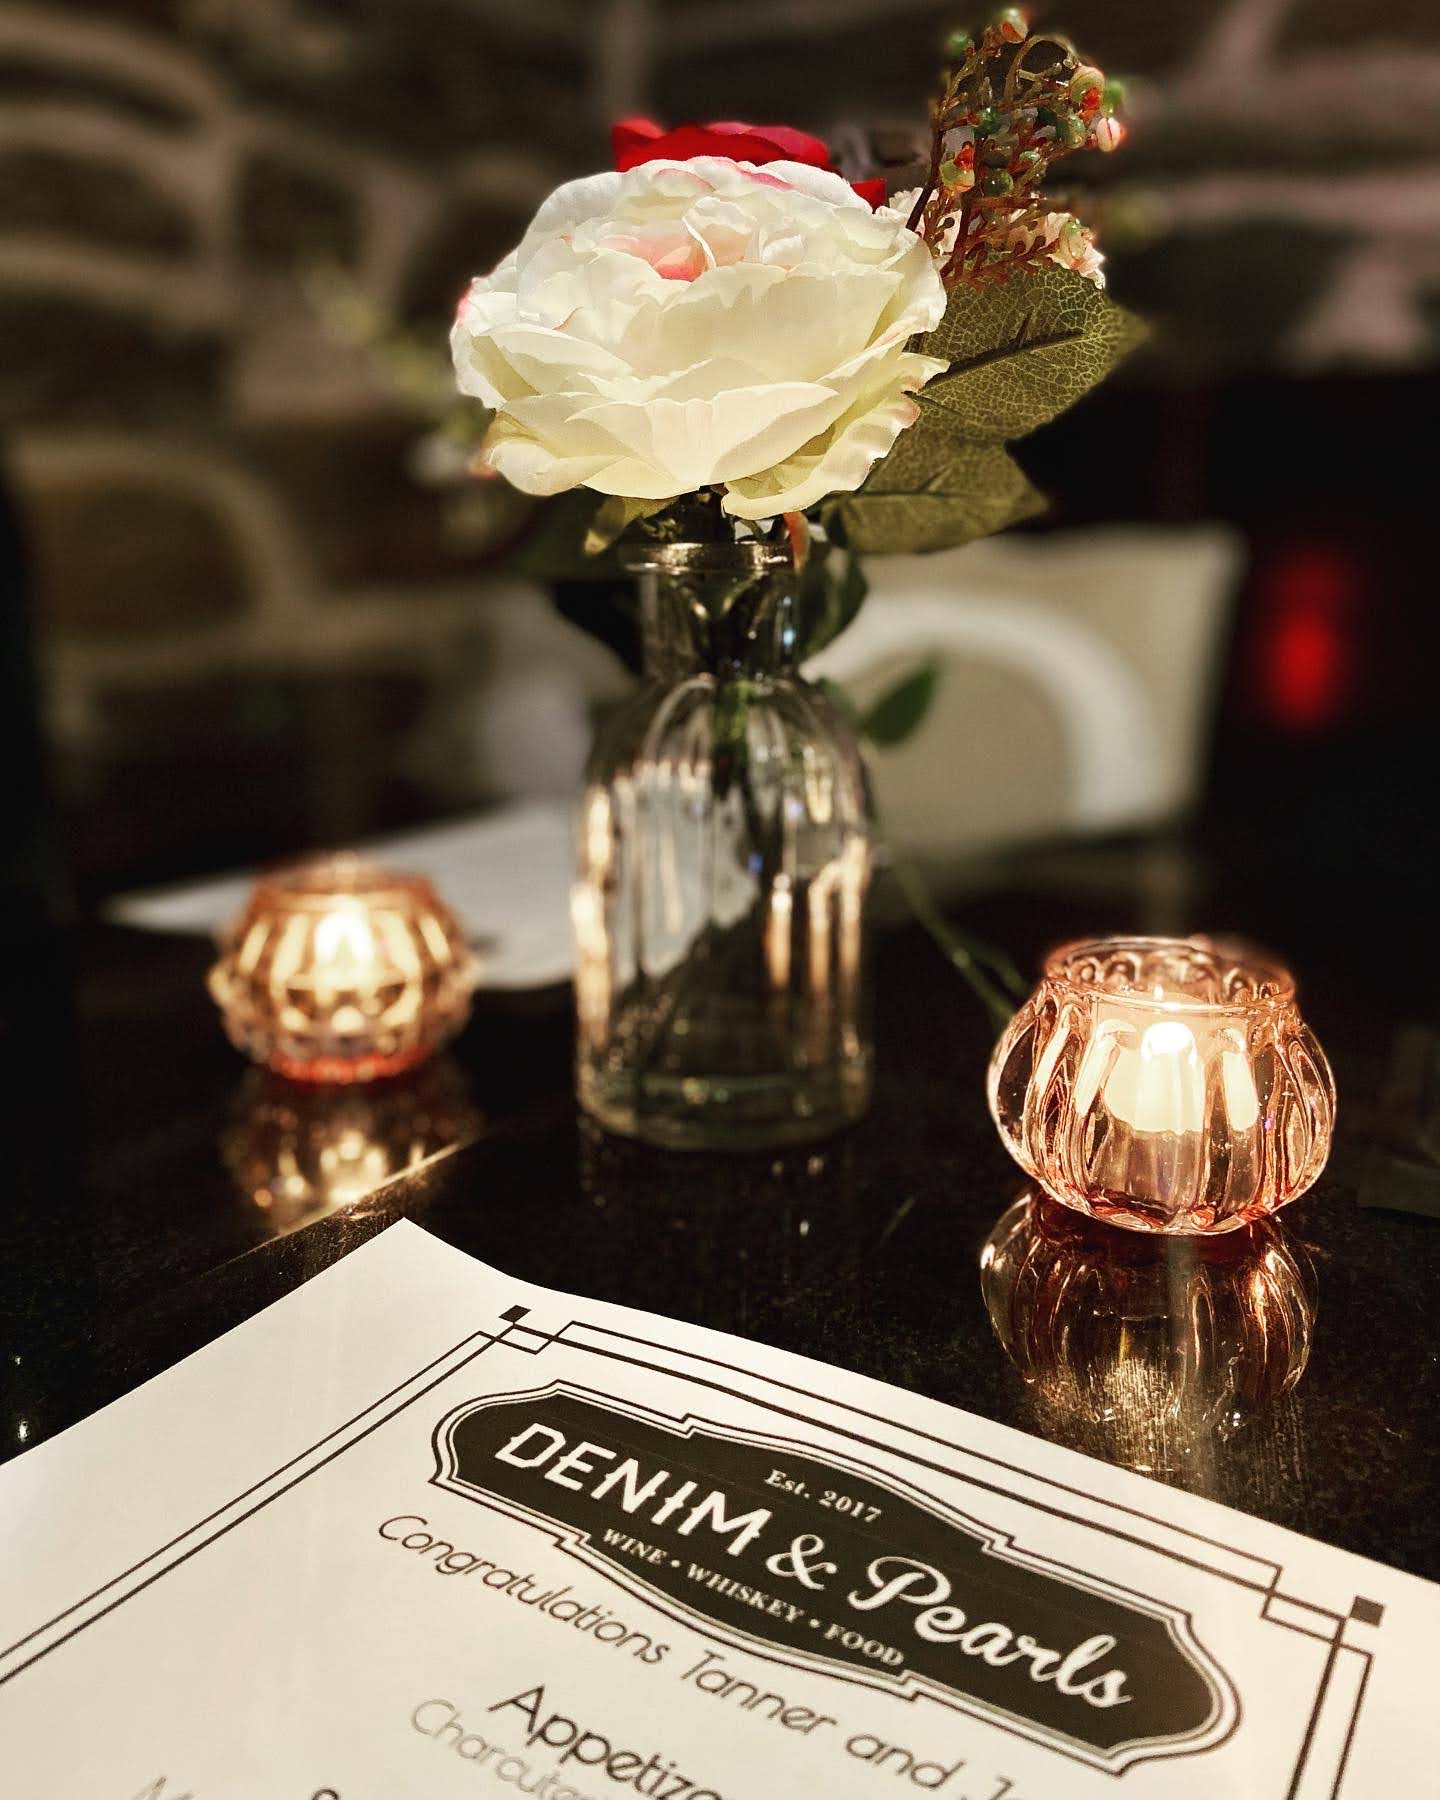 Denim & Pearls Restaurant, Flower decoration on the table